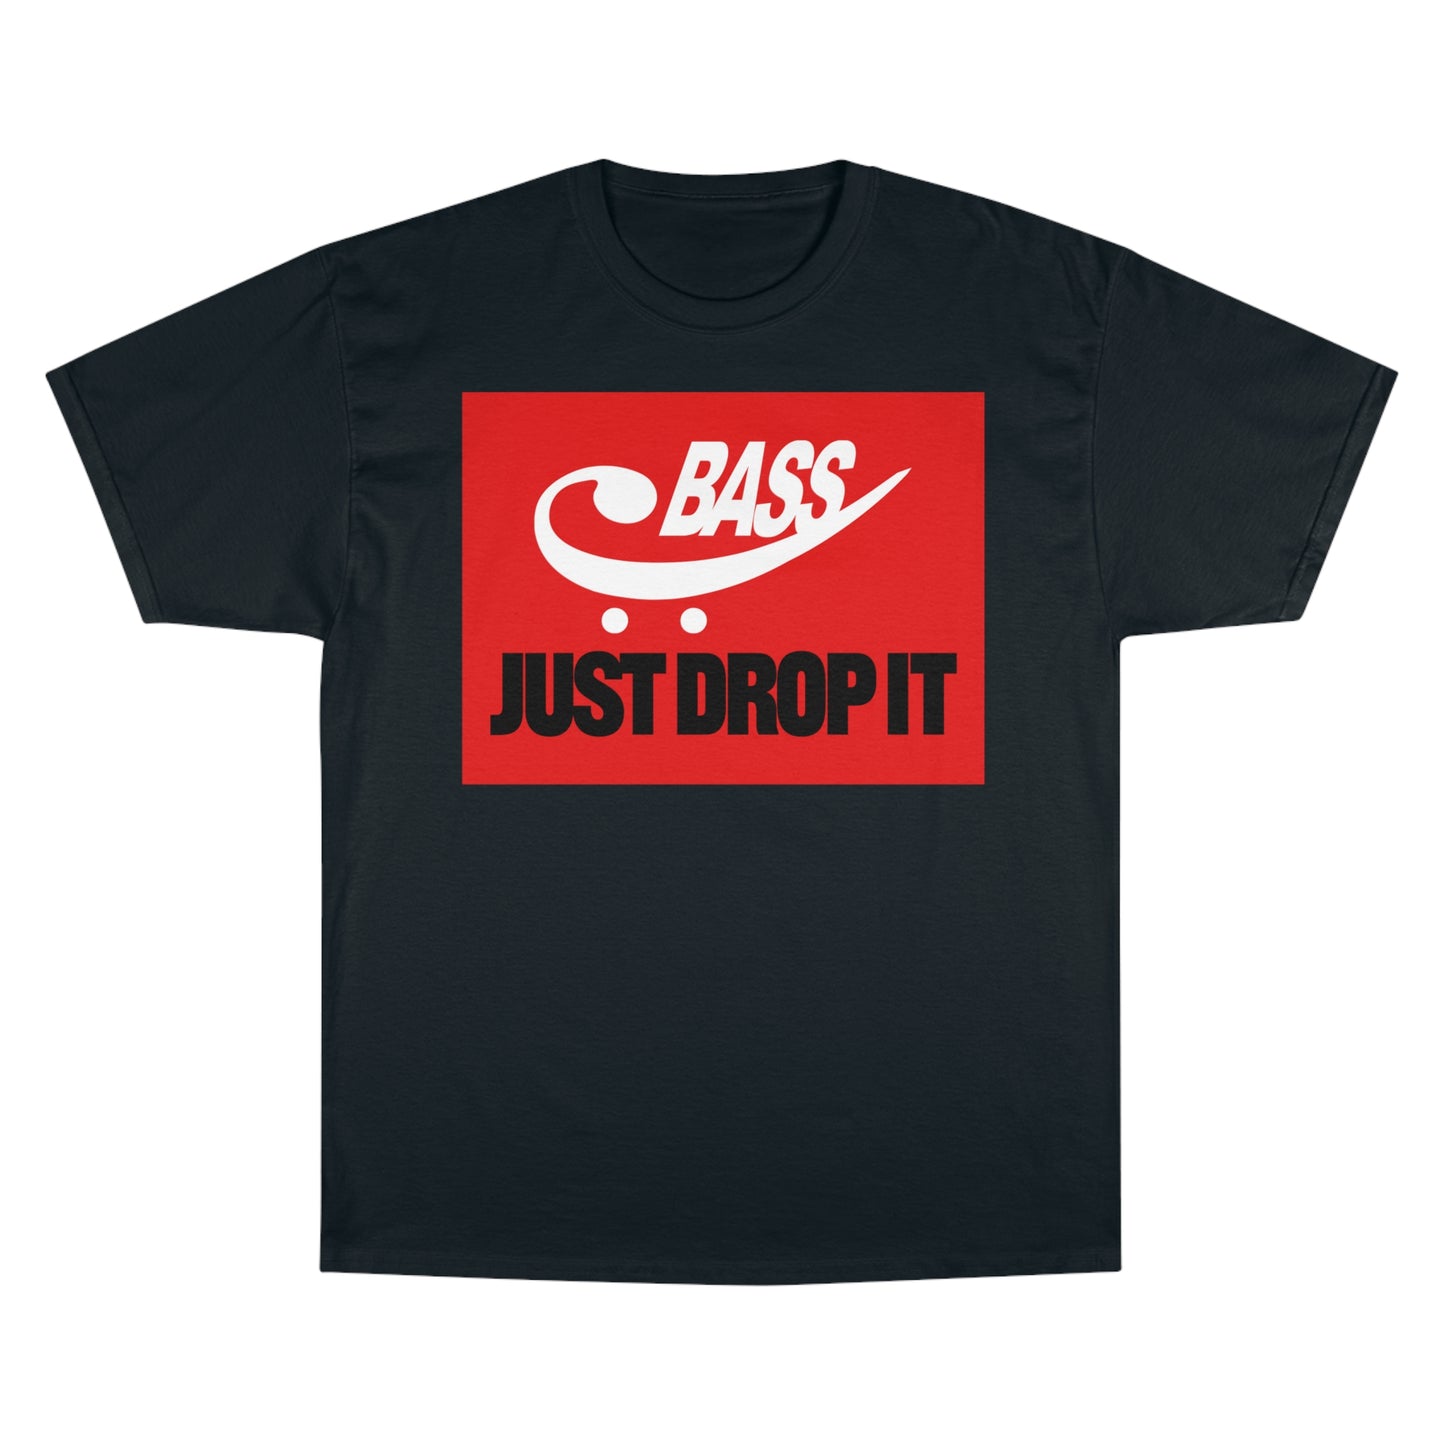 "BASS - Just Drop It" Champion T-Shirt